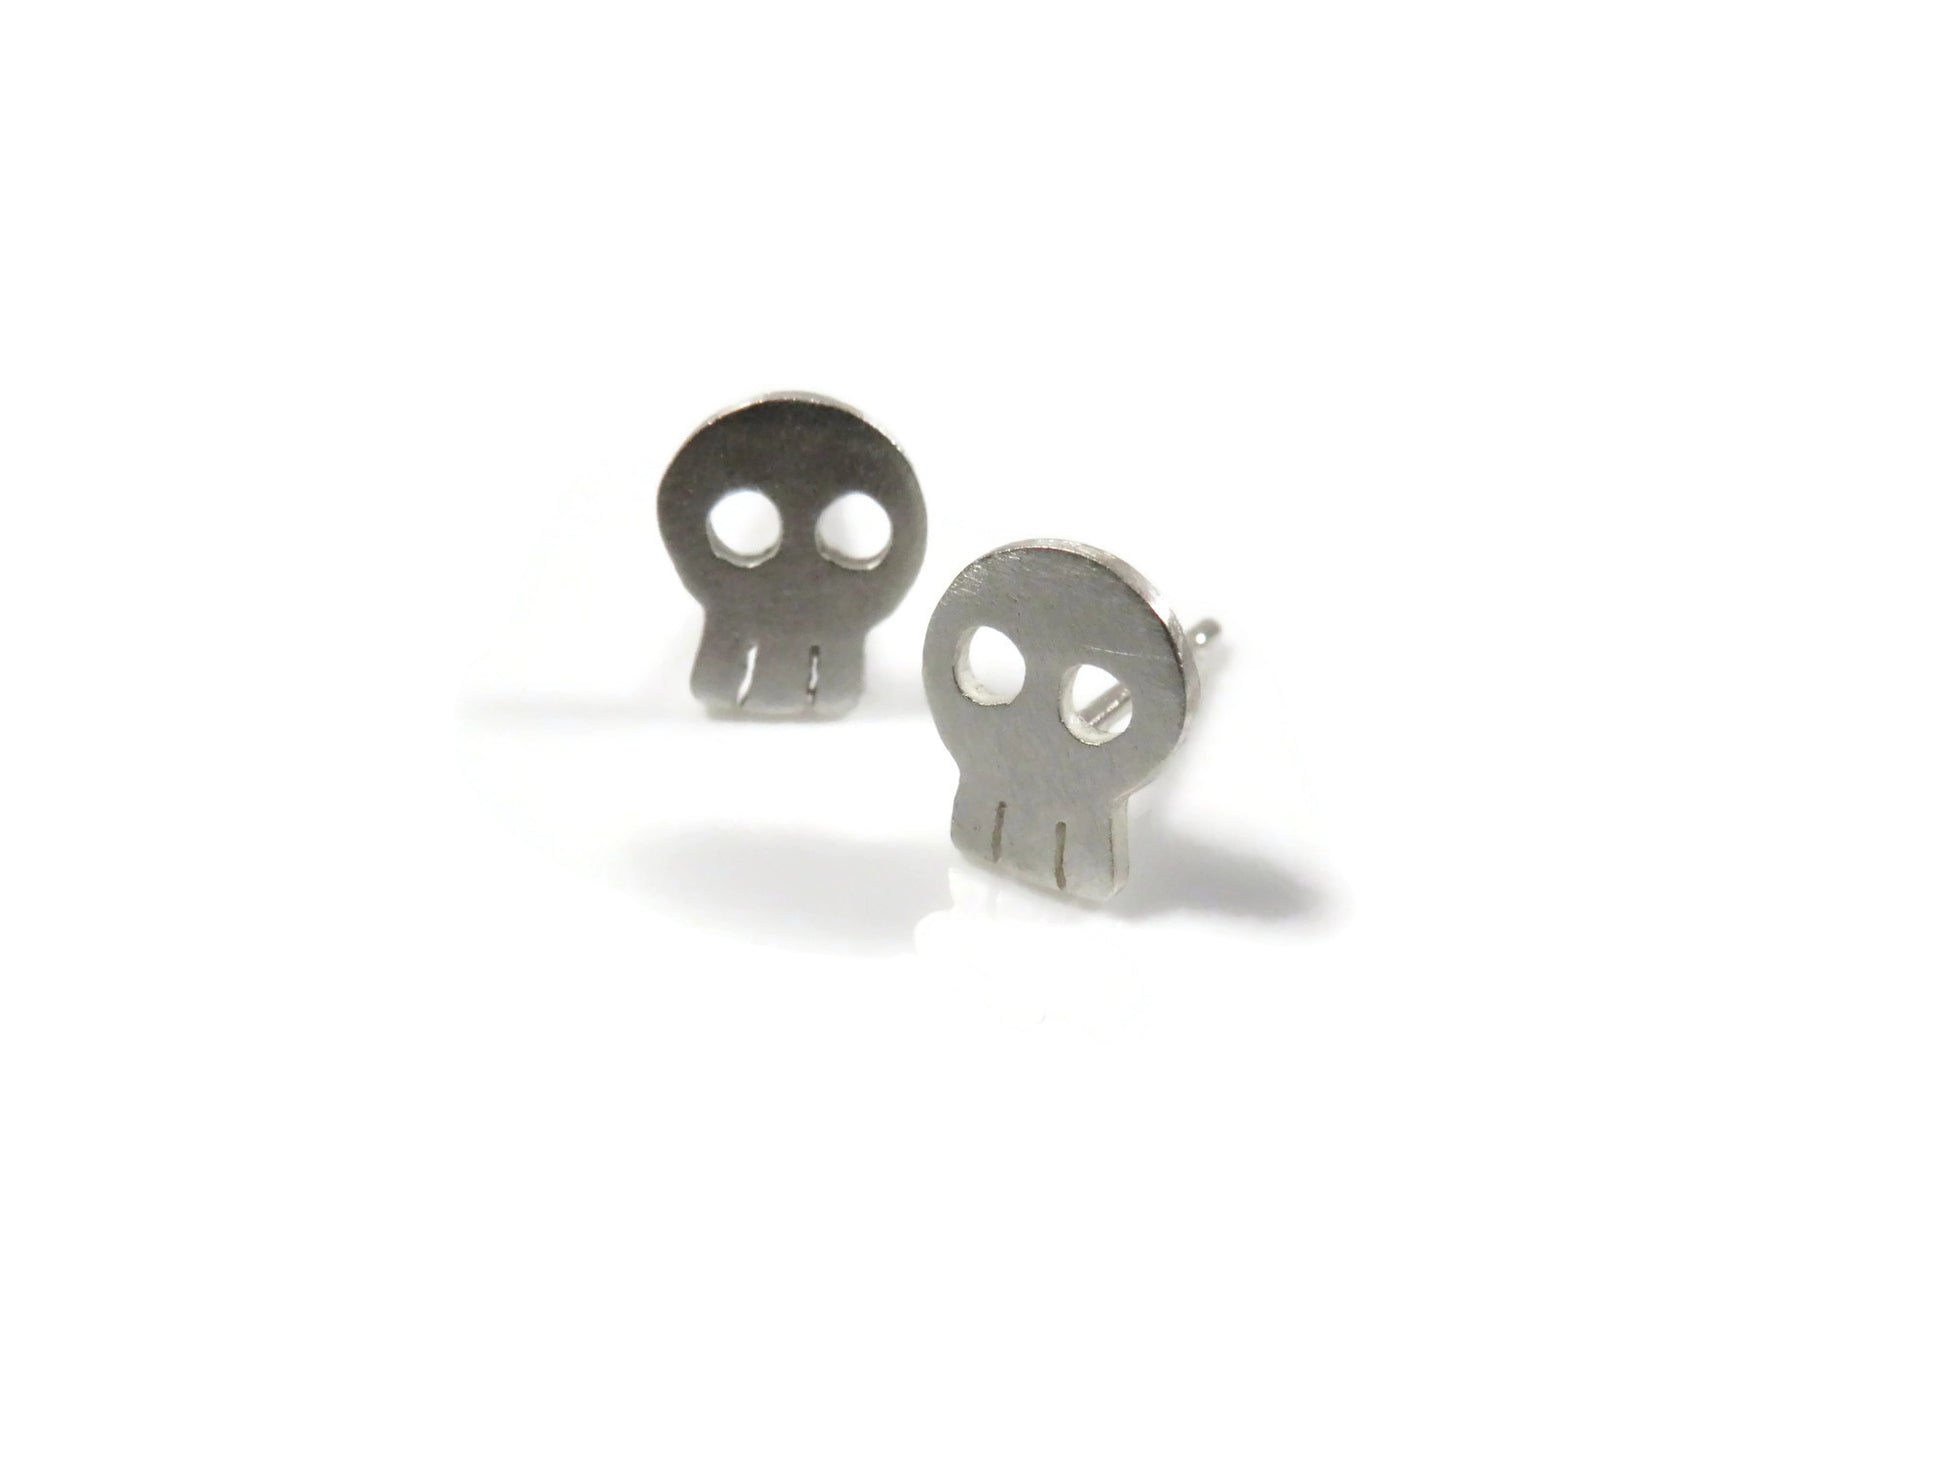 Tiny Skulls Silver Stud Earrings